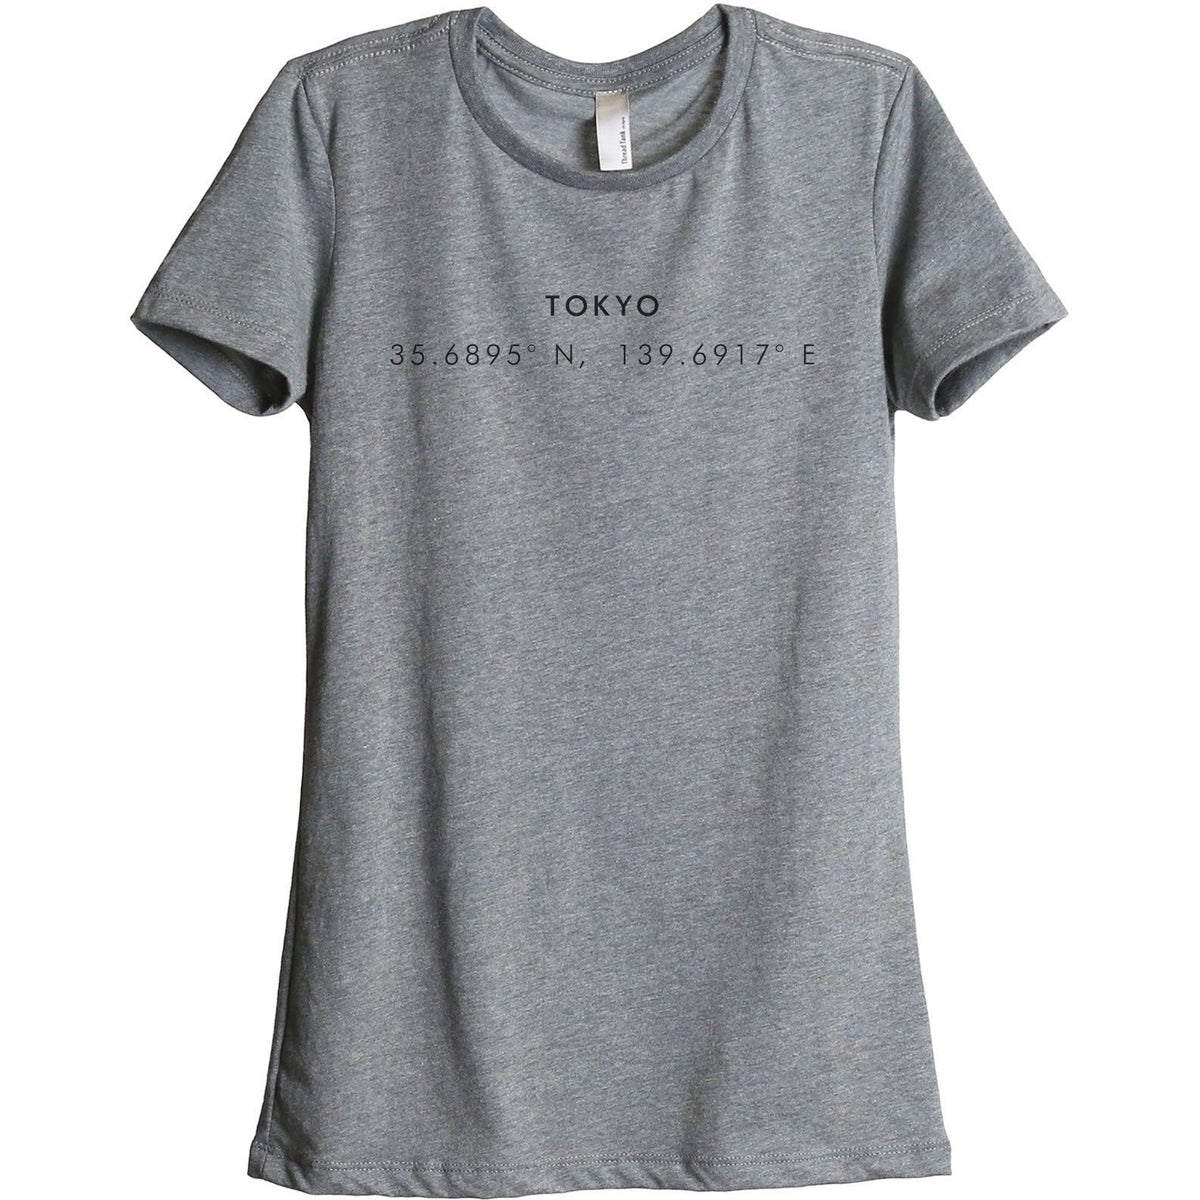 Tokyo Coordinates Women's Relaxed Crewneck Graphic T-Shirt Top Tee